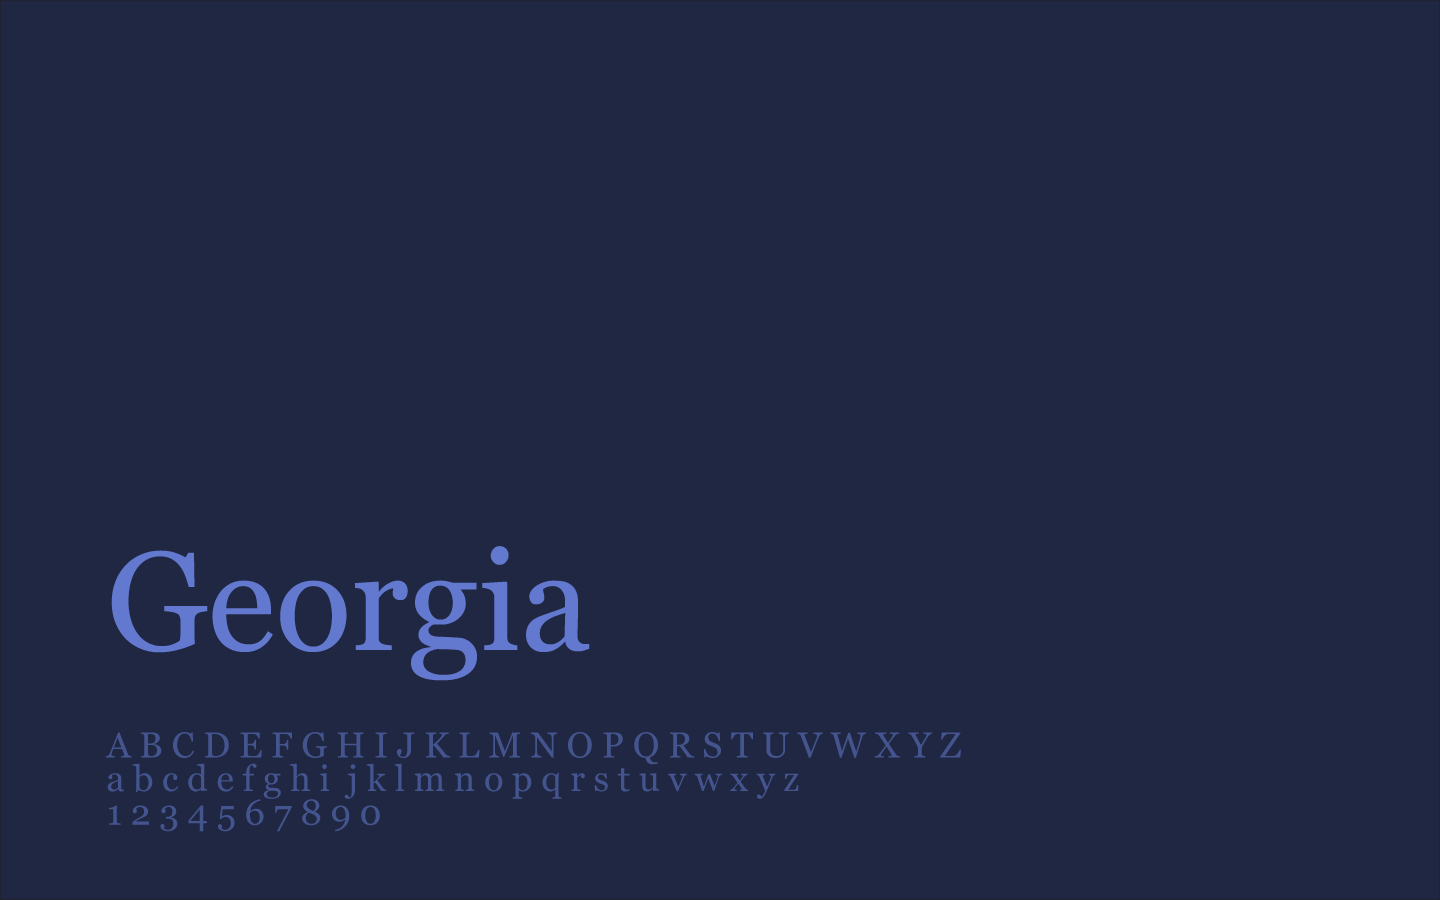 Georgia Typography Wallpaper